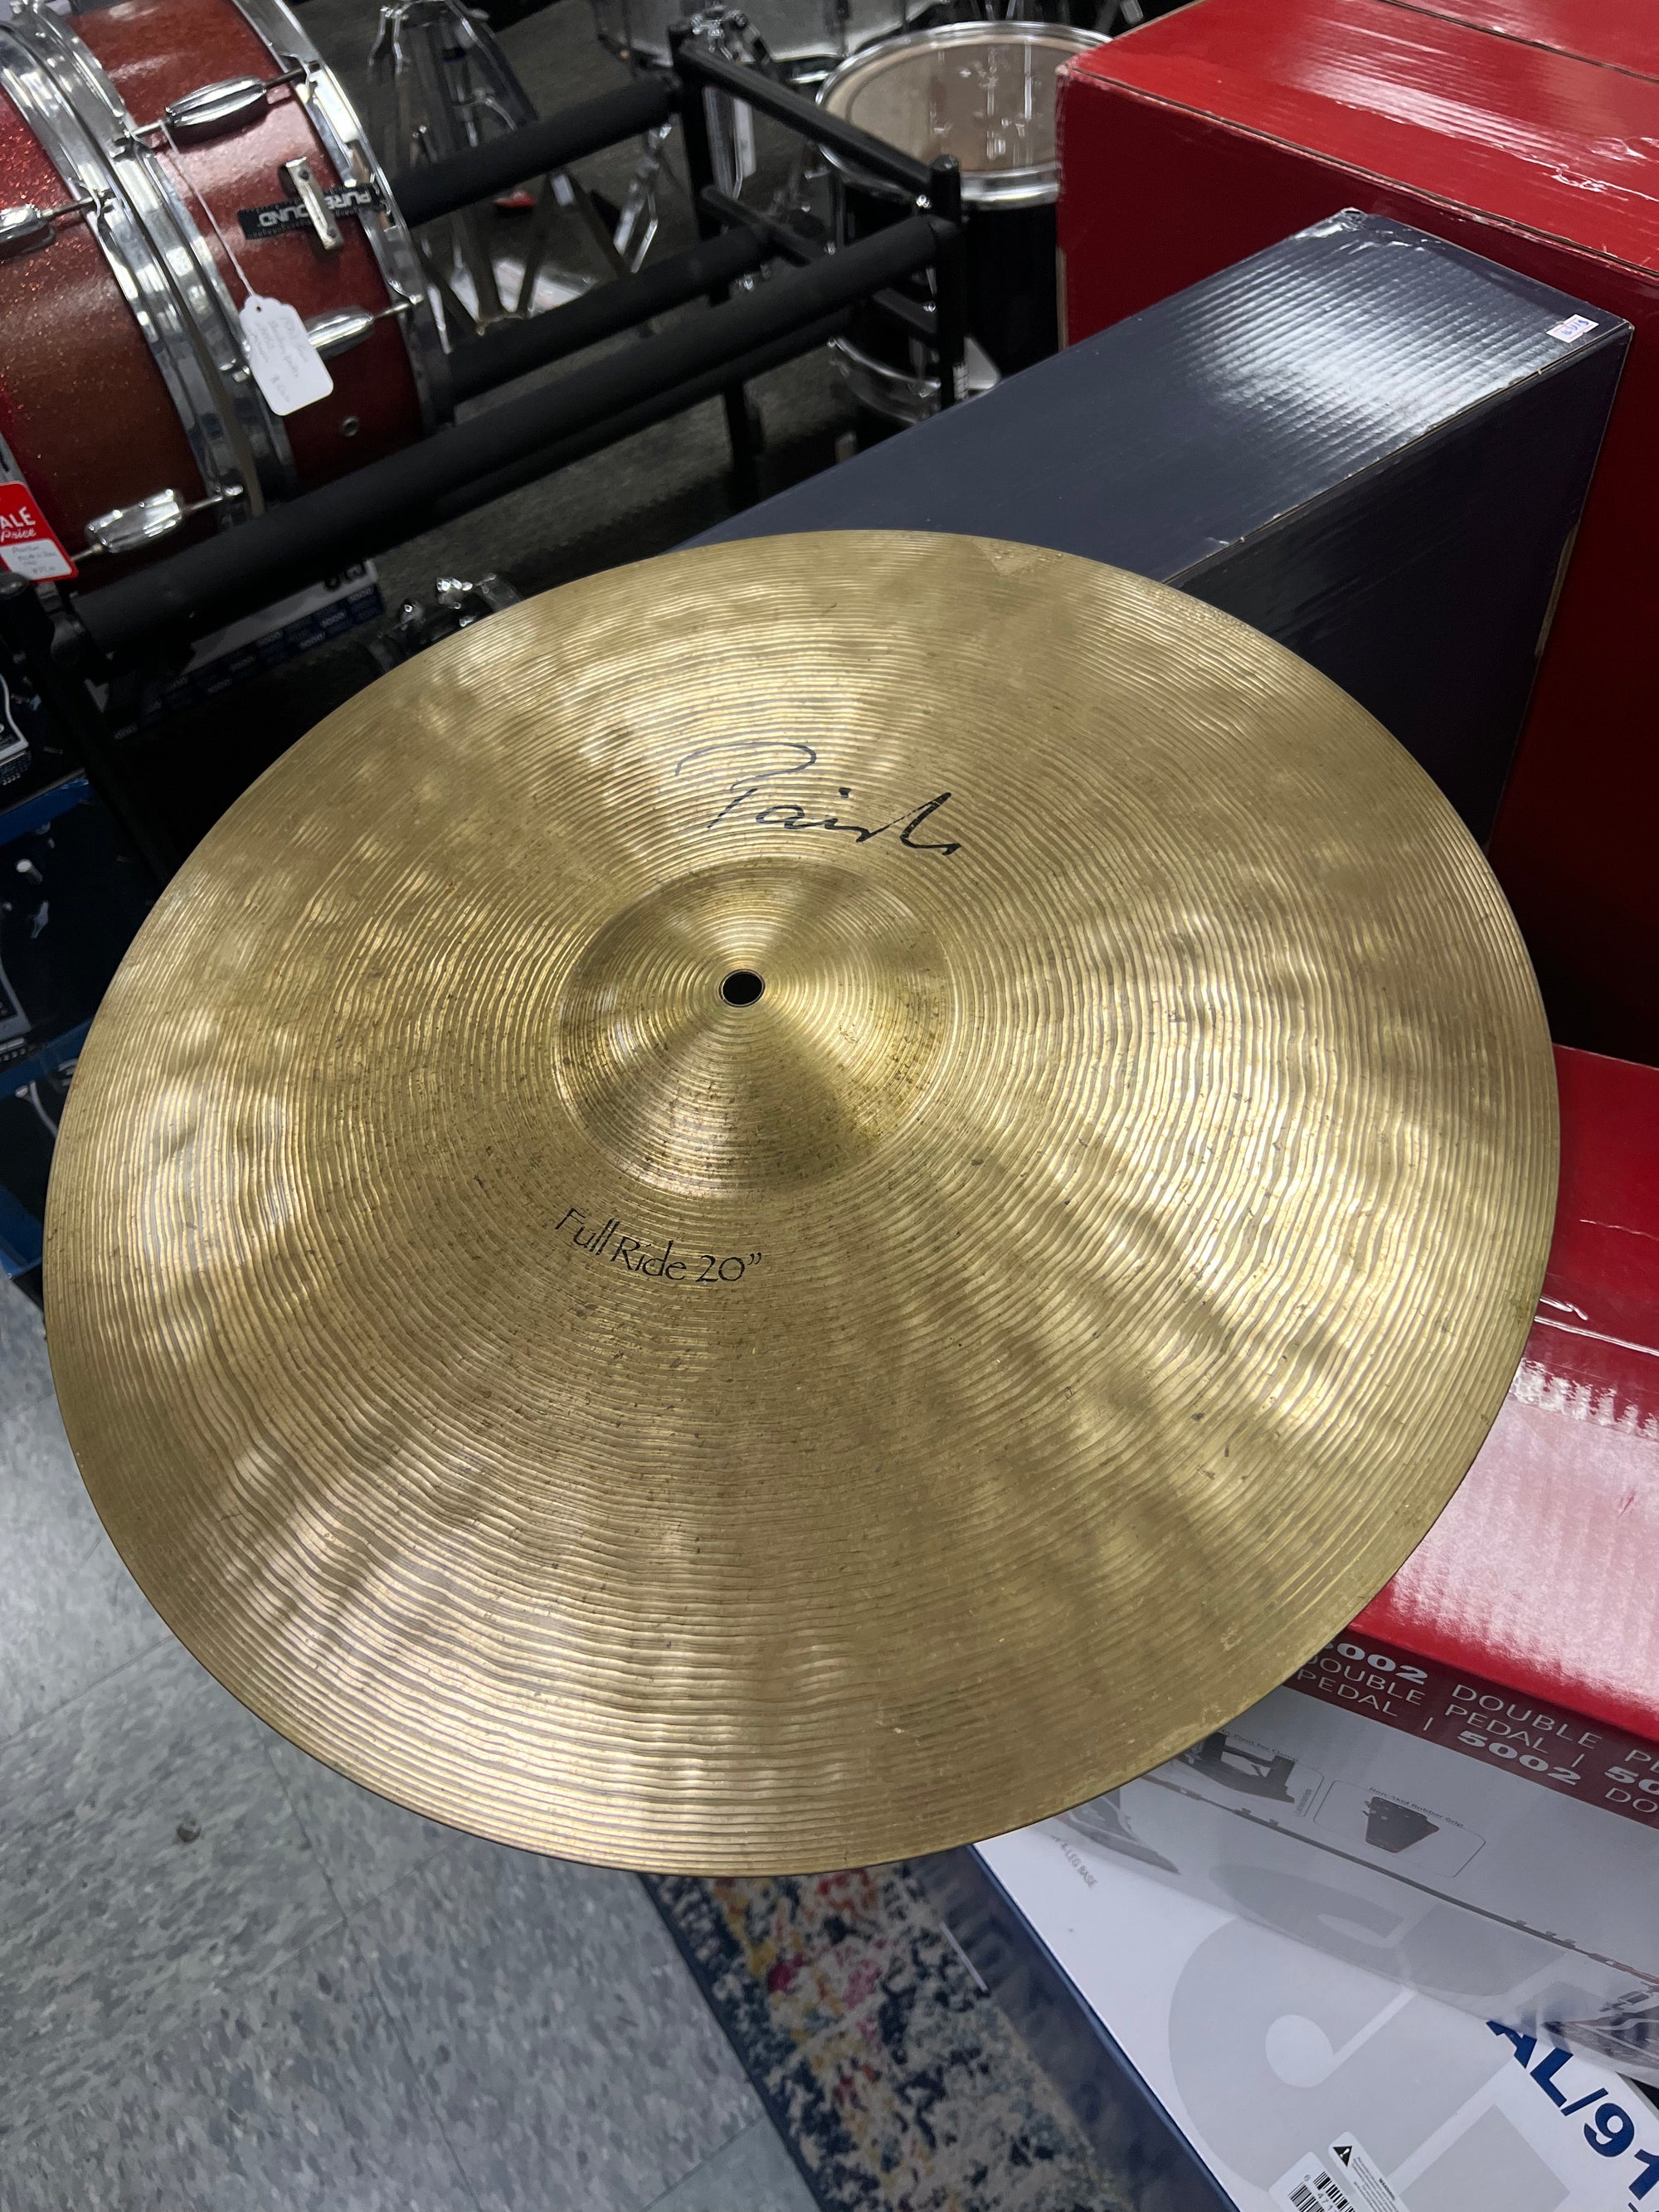 Paiste 20” Signature full ride Cymbal